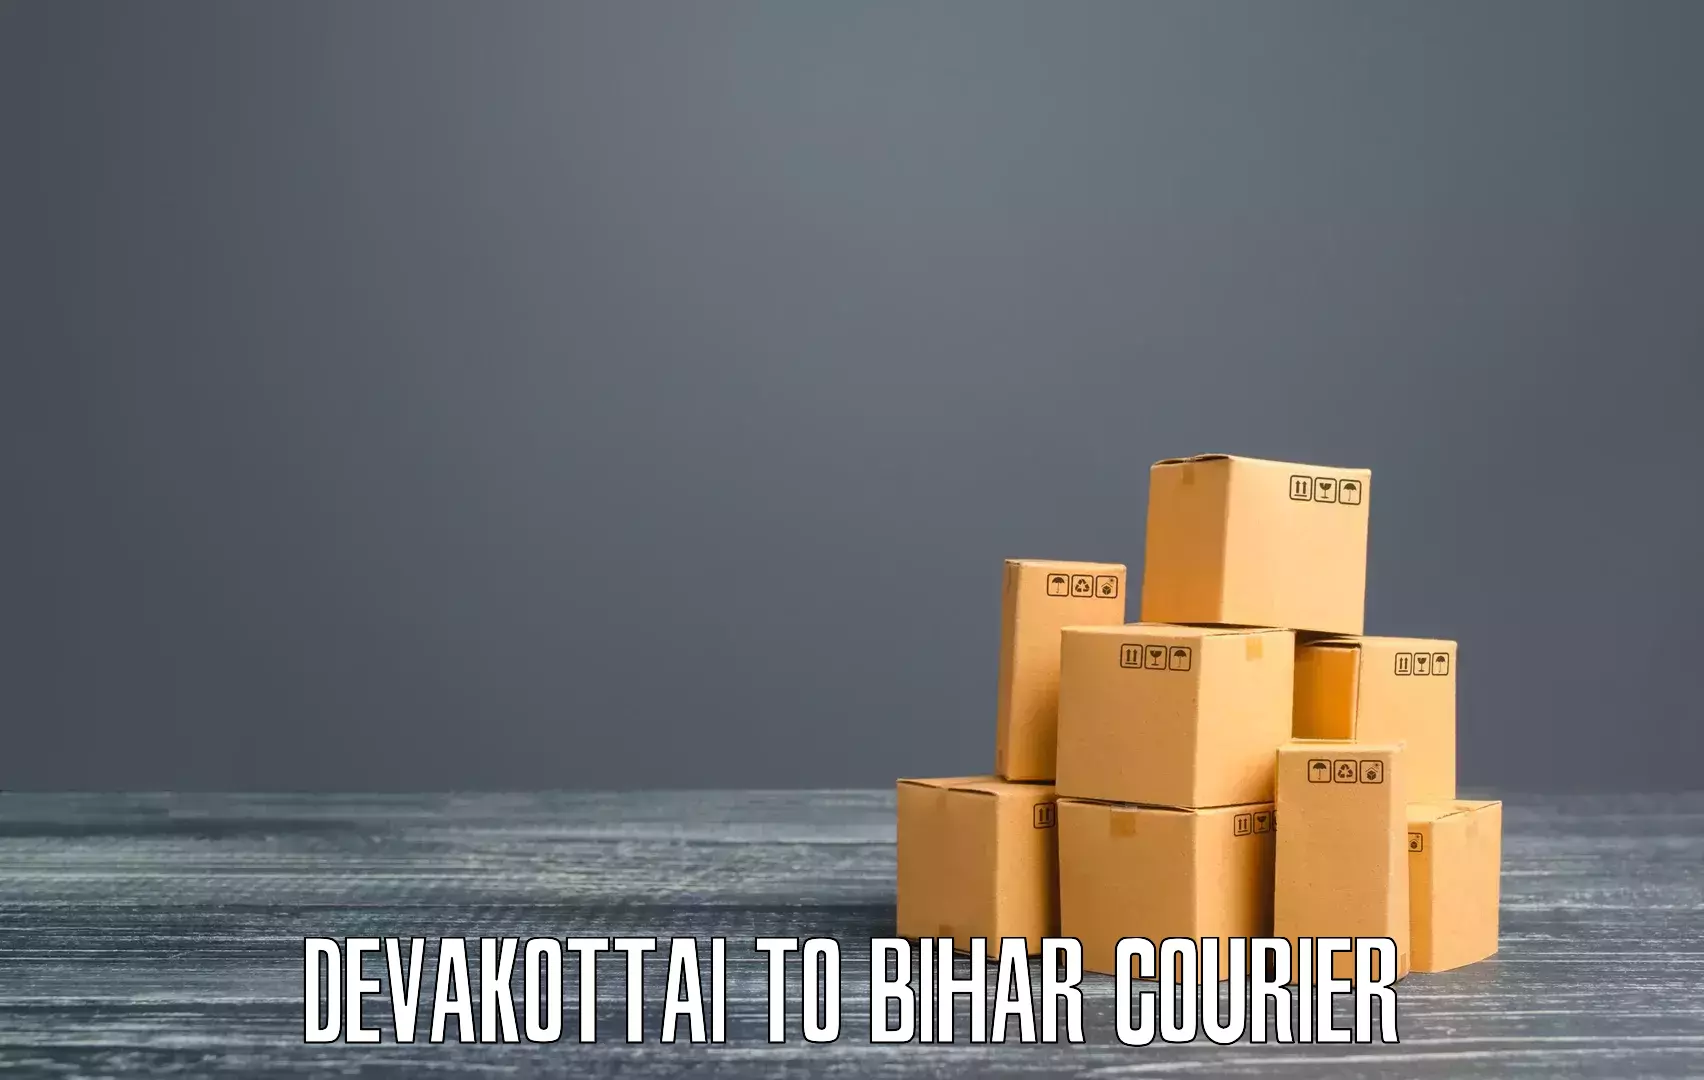 Diverse delivery methods Devakottai to Biraul